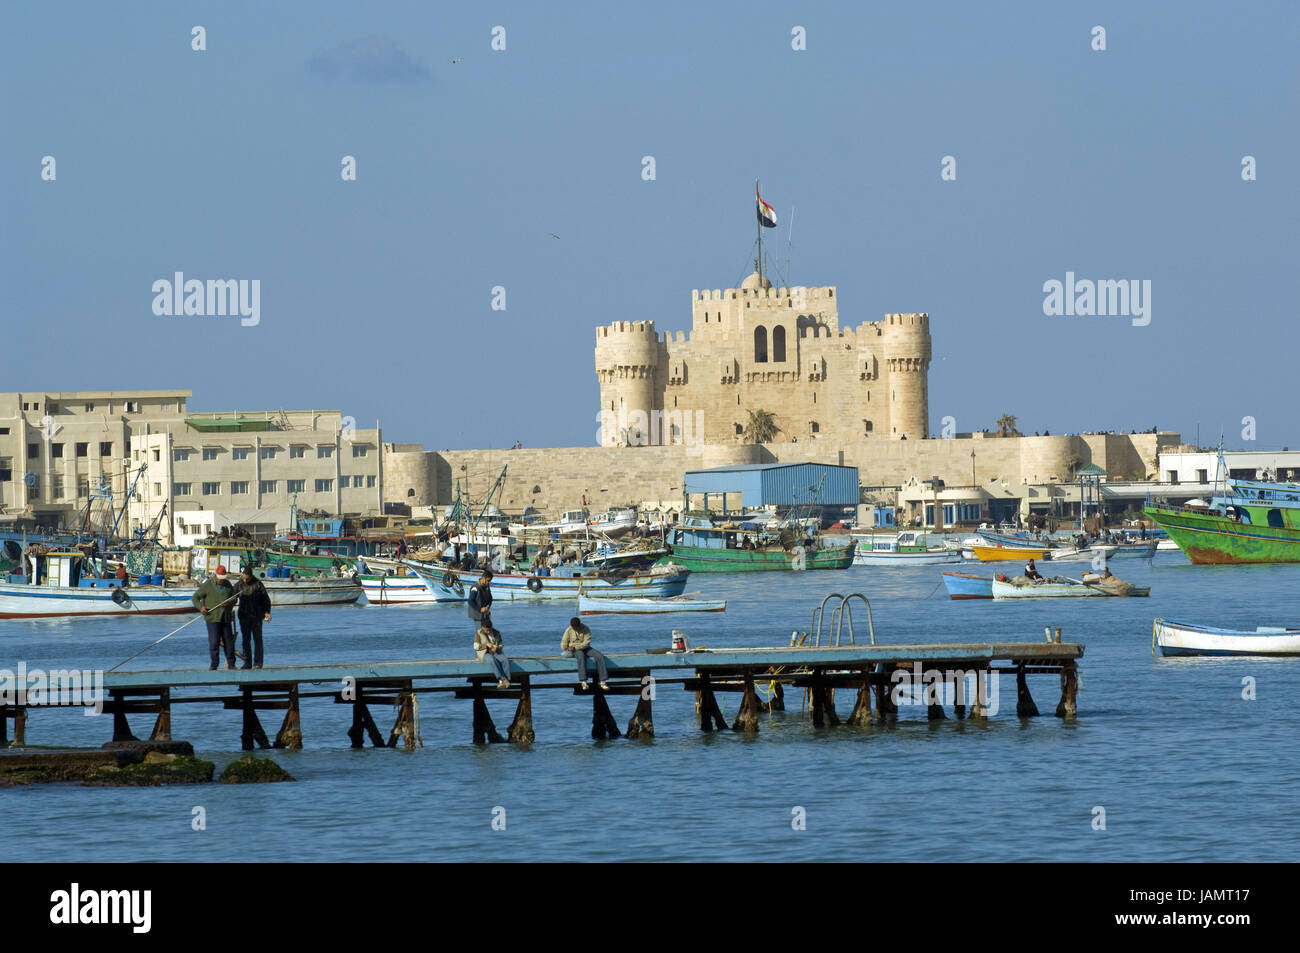 Egypt,Alexandria,harbour,angler,sea,fort Qaitbay, Stock Photo